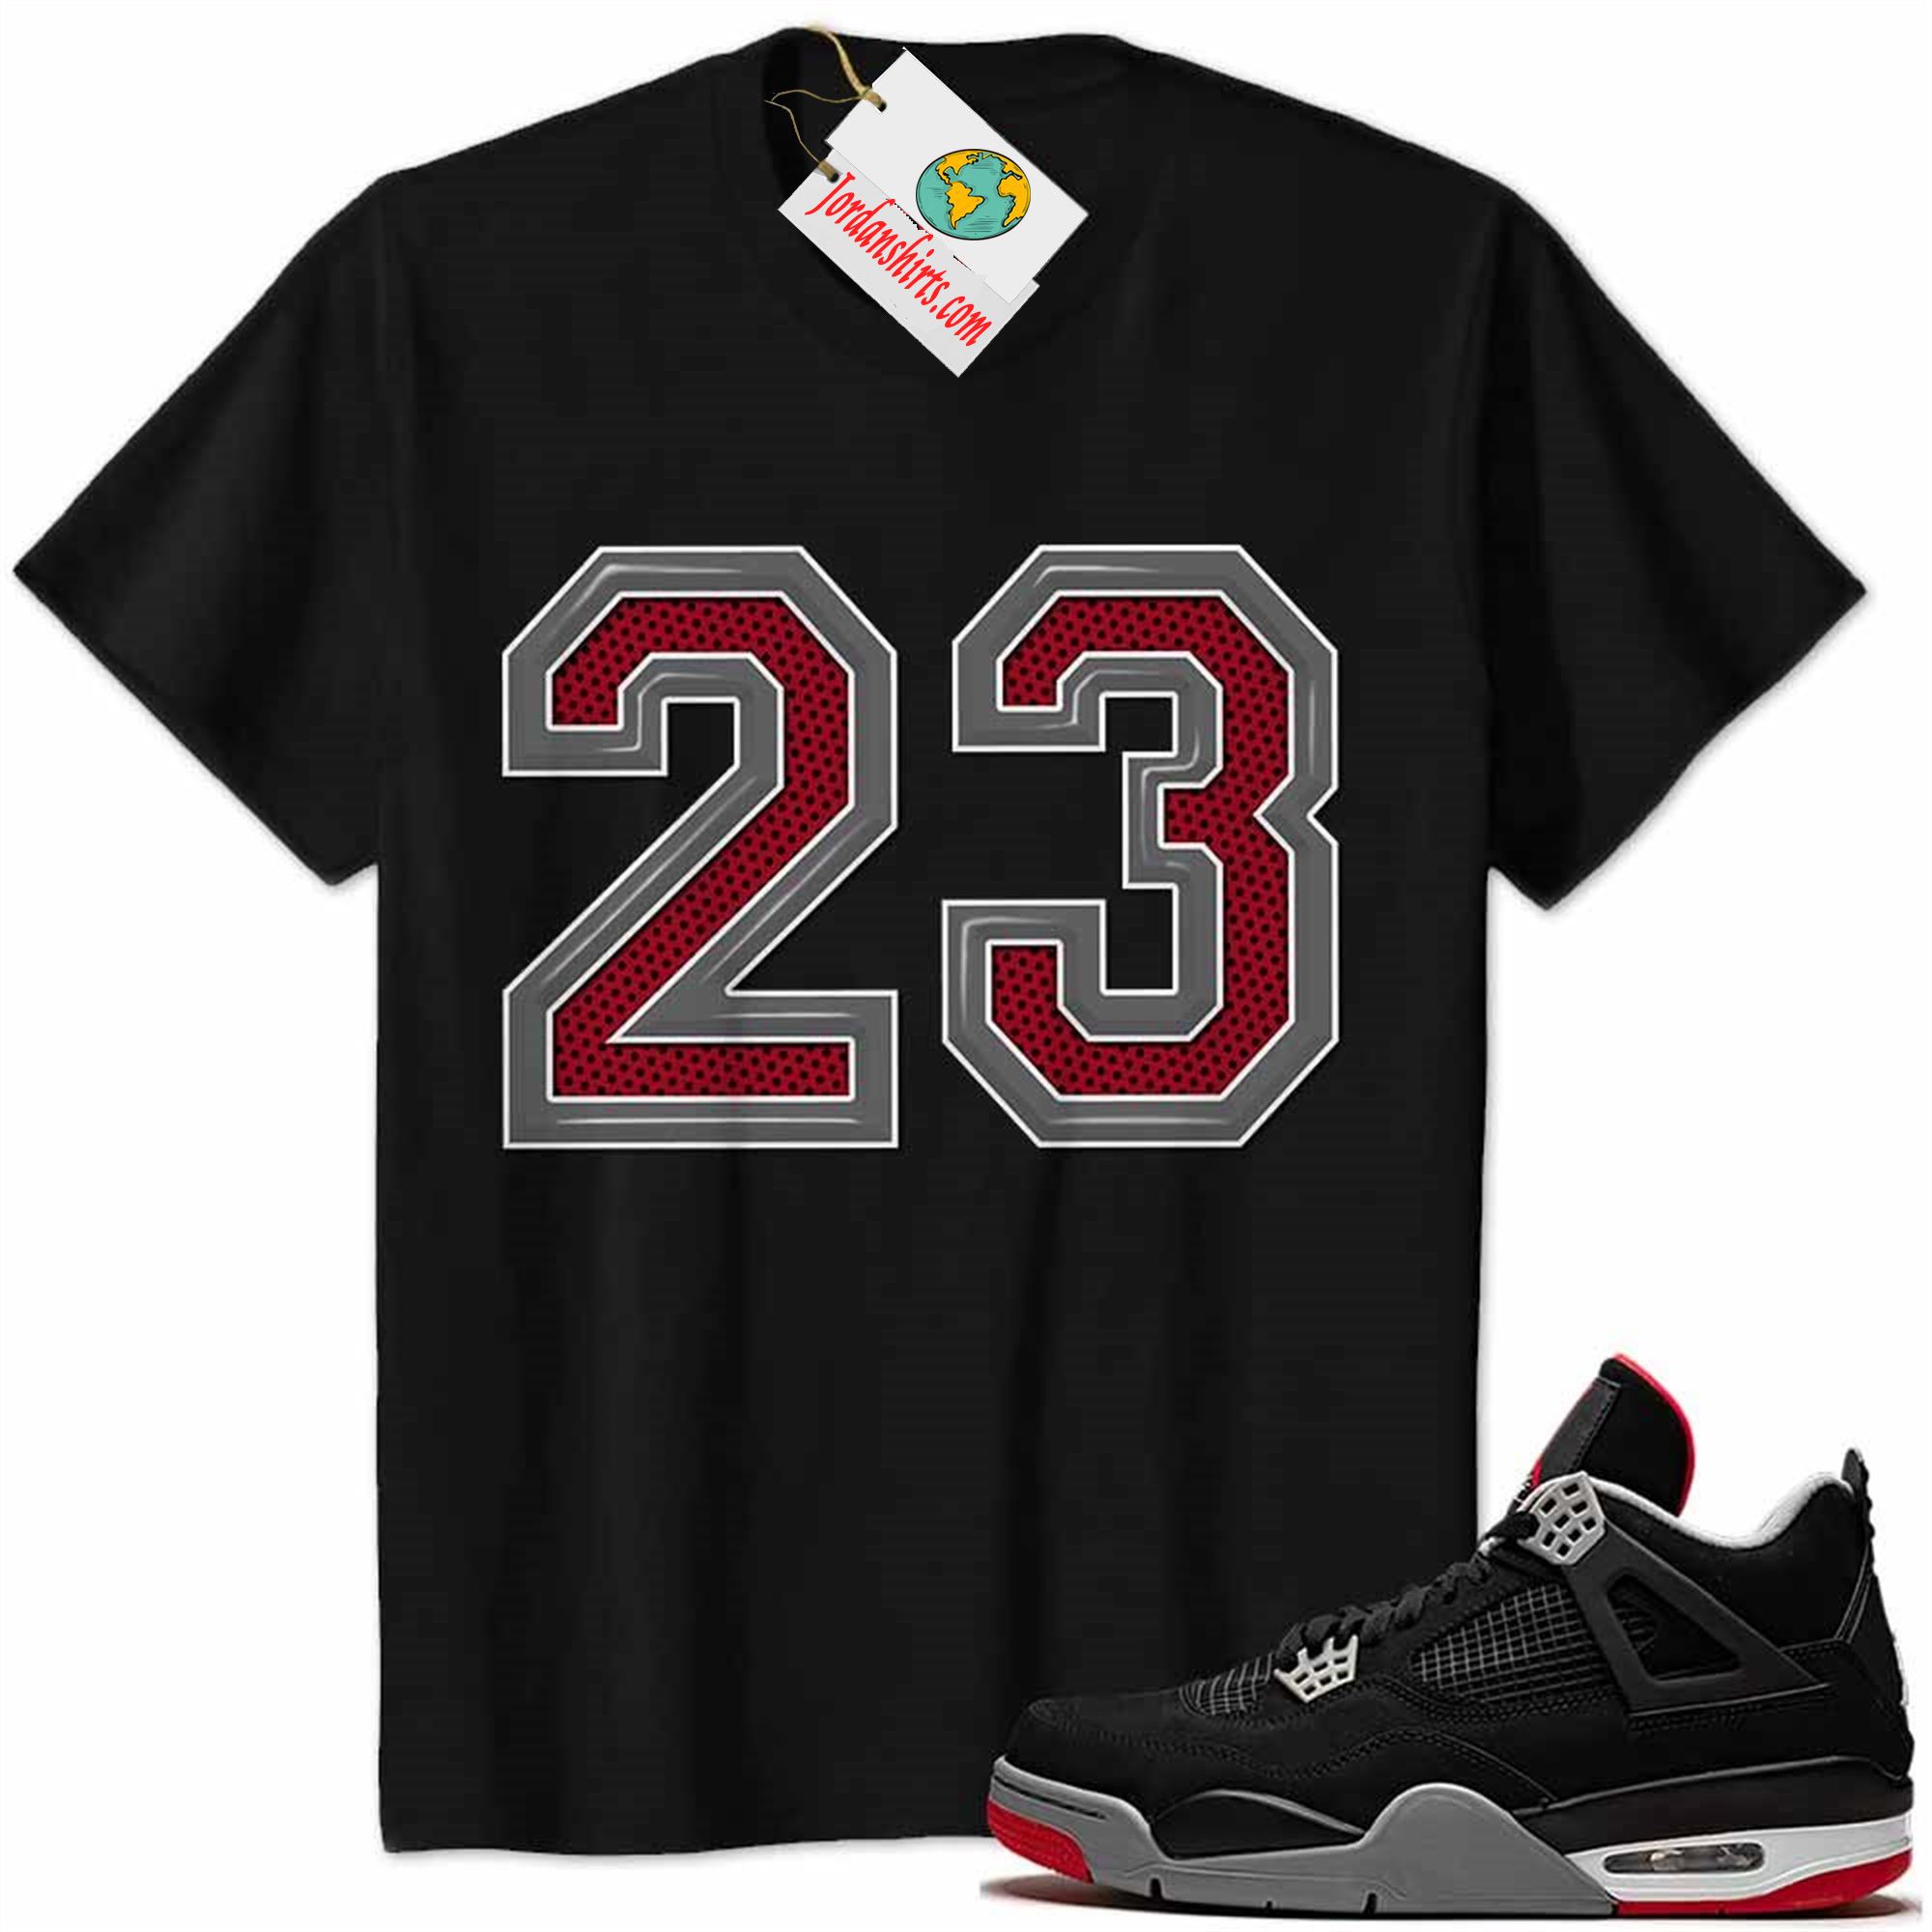 Jordan 4 Shirt, Jordan 4 Bred Shirt Michael Jordan Number 23 Black Full Size Up To 5xl